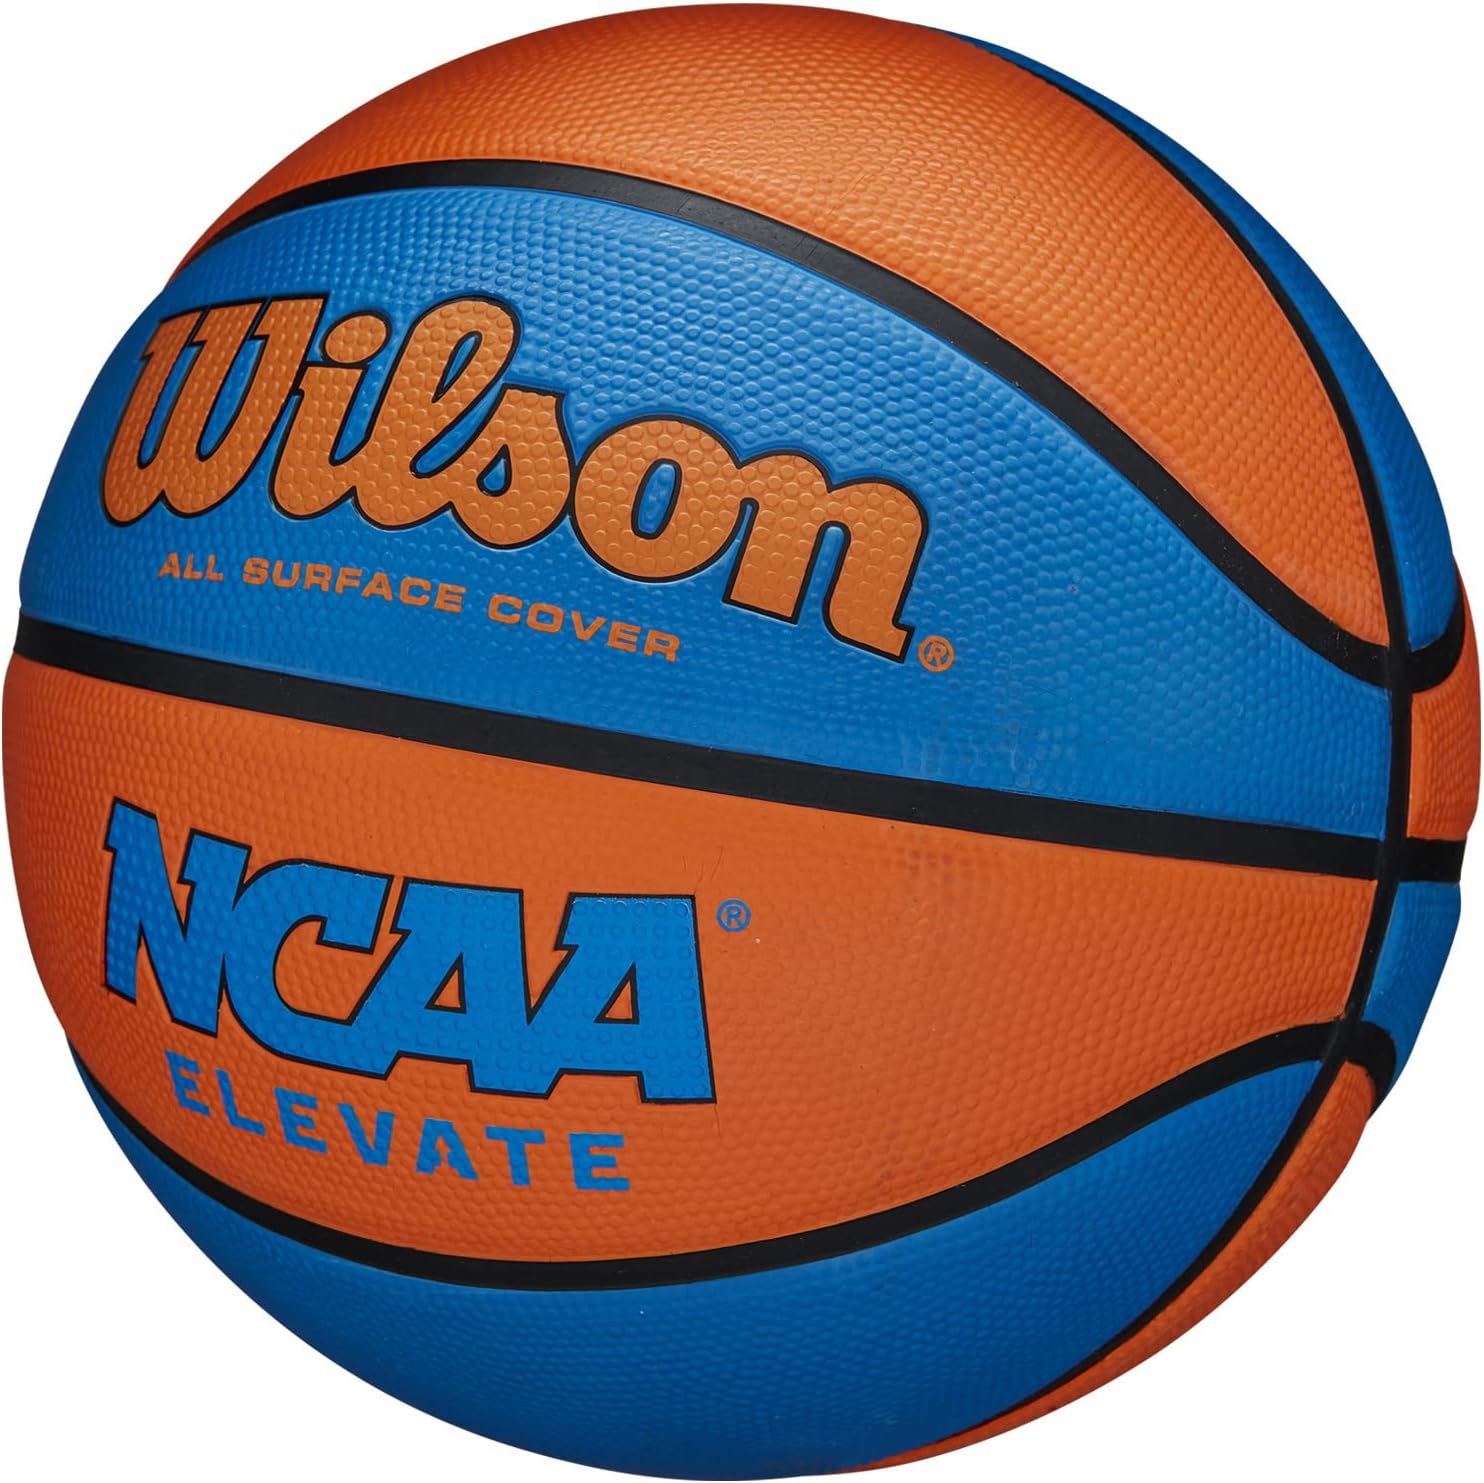 Wilson NCAA Elevate Basketball, Size 5 - 27.5", Royal/Orange